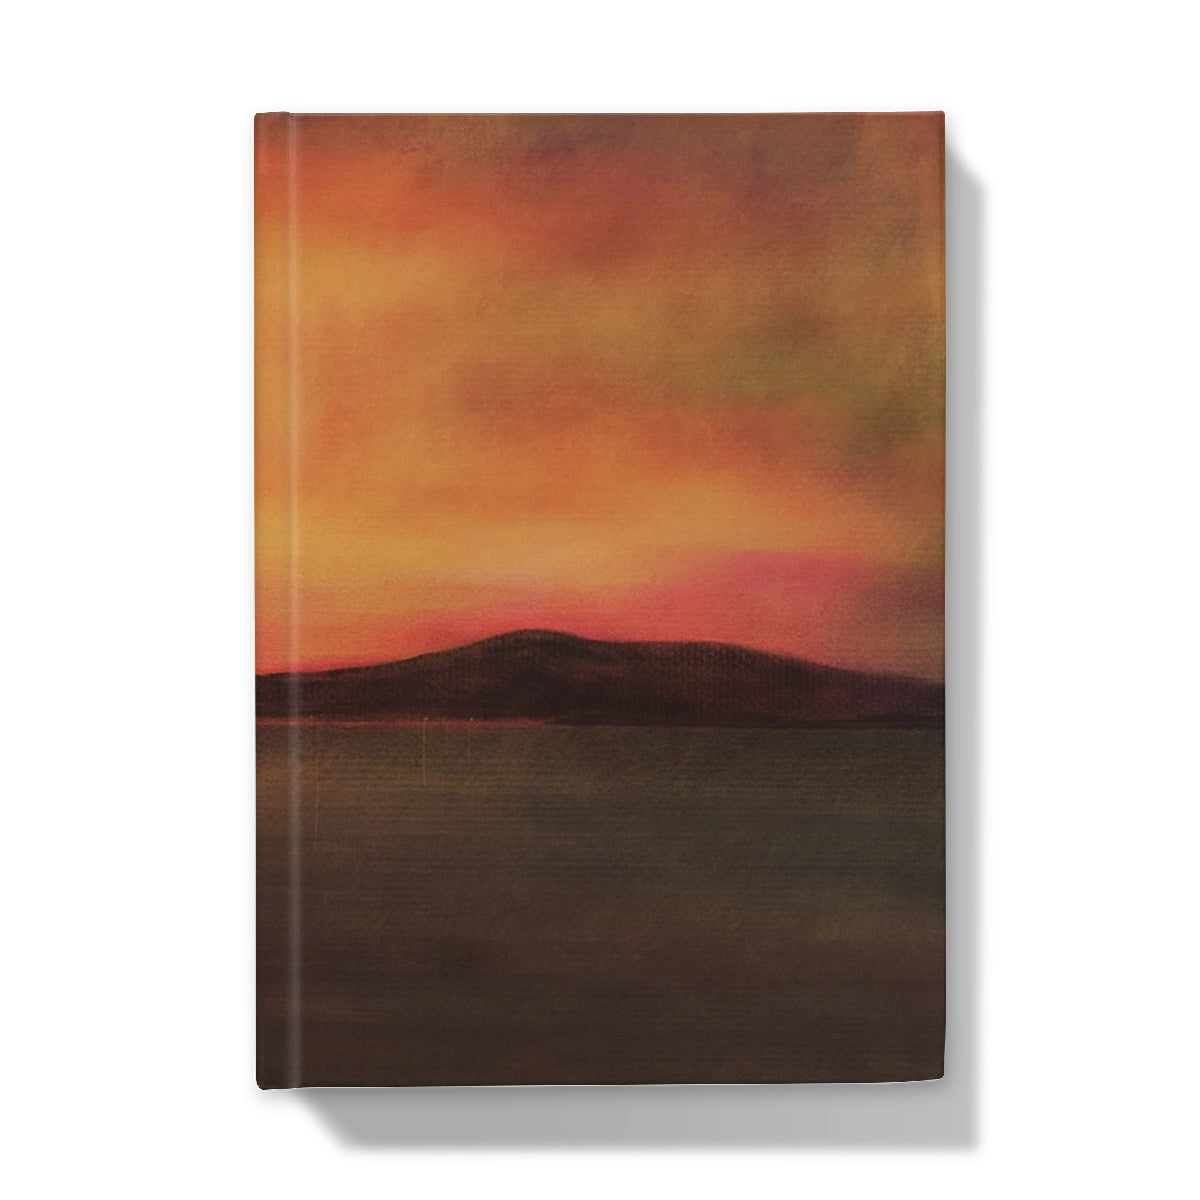 Harris Sunset Art Gifts Hardback Journal-Journals & Notebooks-Hebridean Islands Art Gallery-A4-Plain-Paintings, Prints, Homeware, Art Gifts From Scotland By Scottish Artist Kevin Hunter